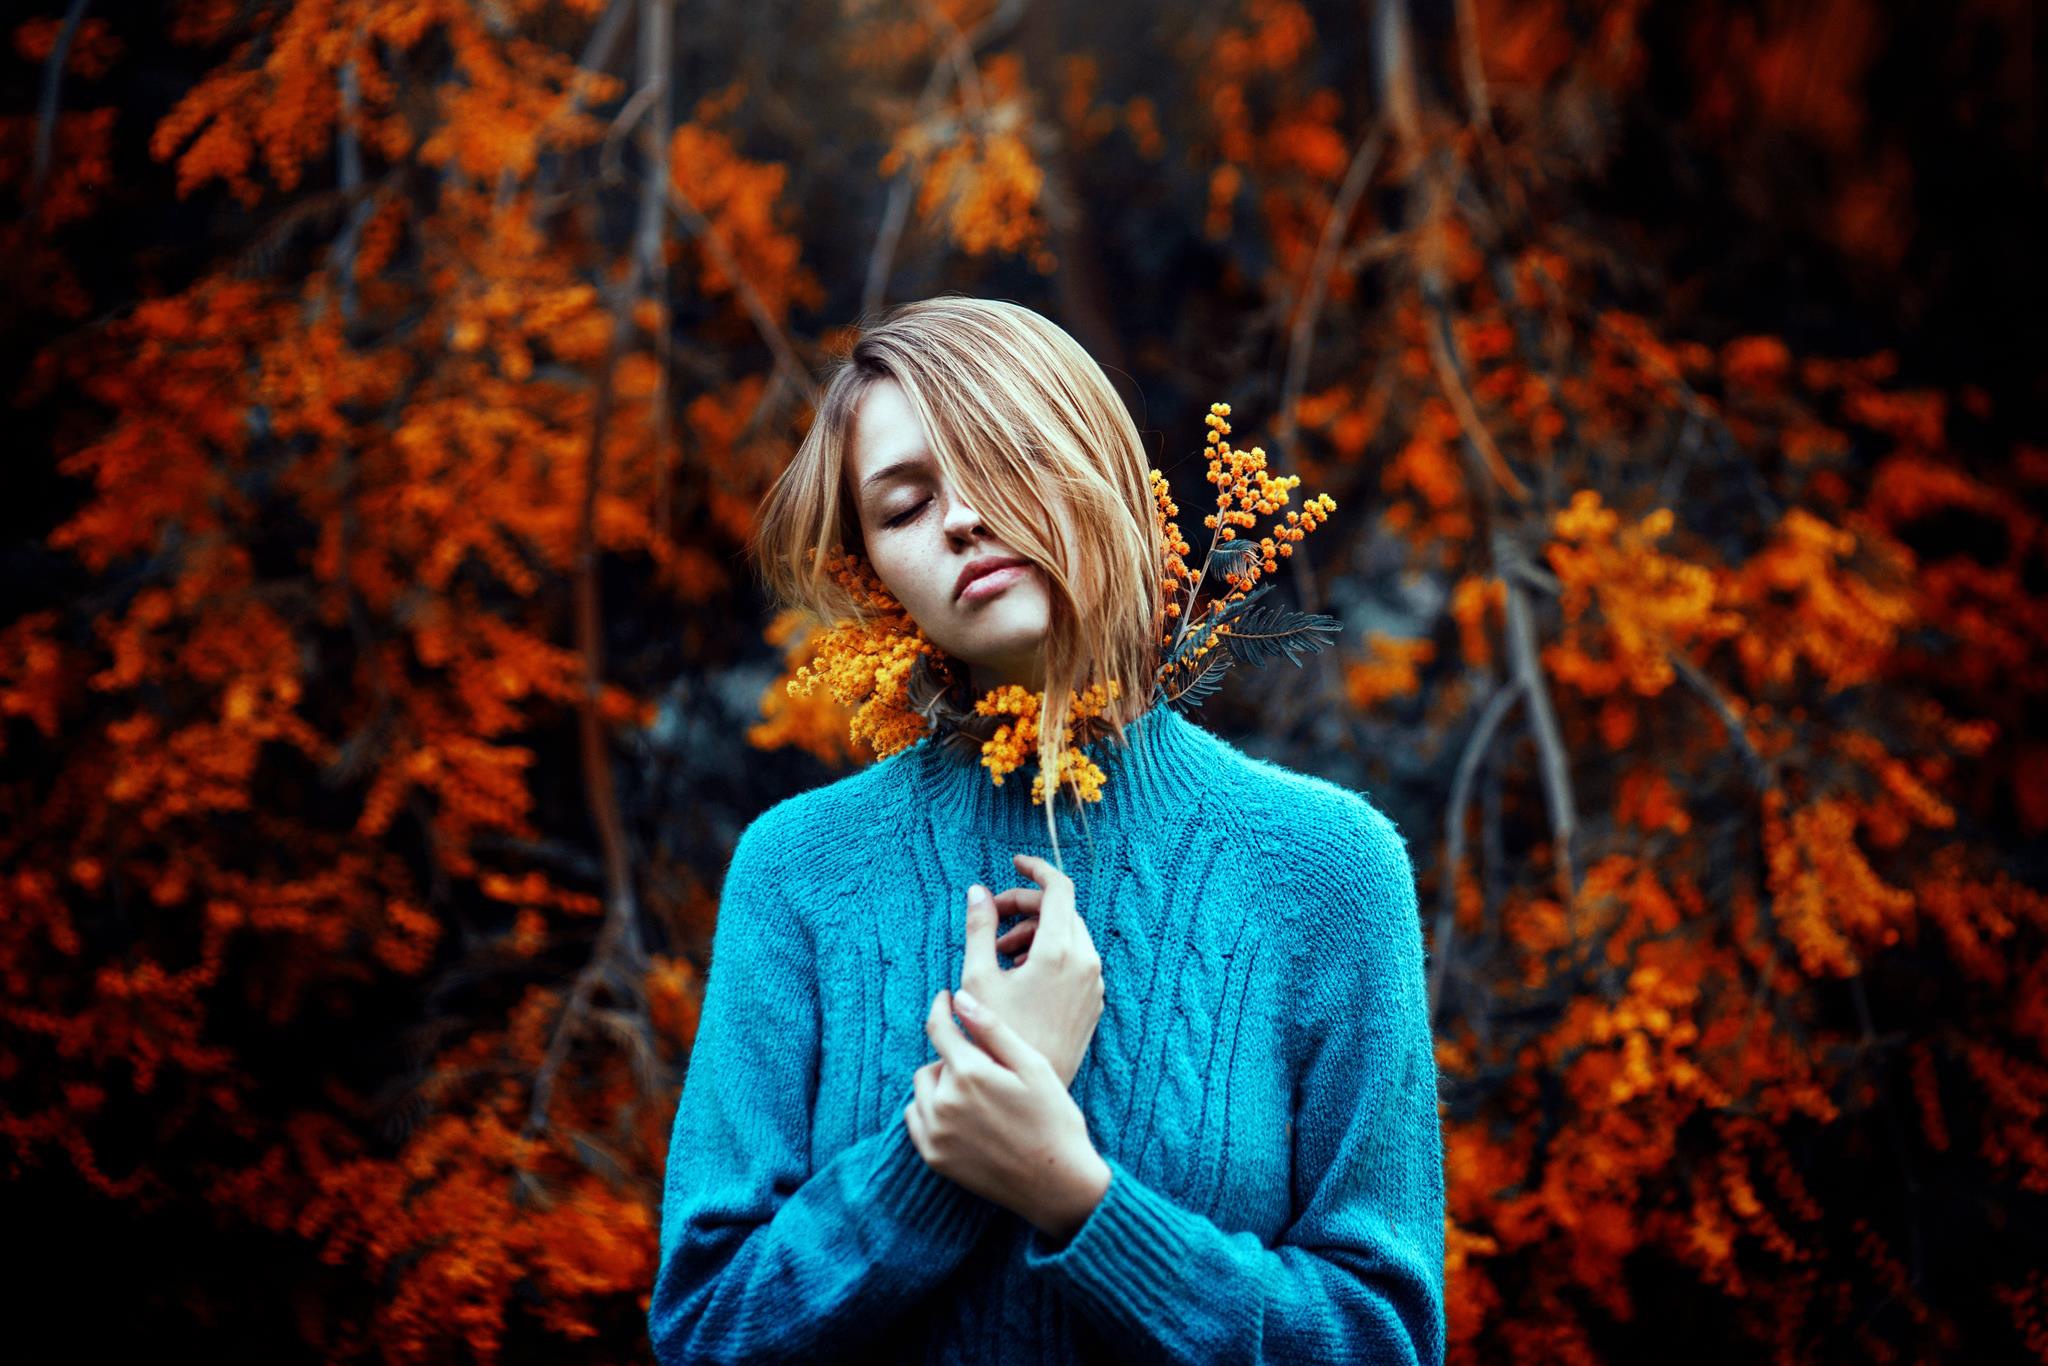 People 2048x1366 Ronny Garcia women model closed eyes blonde women outdoors blue sweater hair in face knit fabric